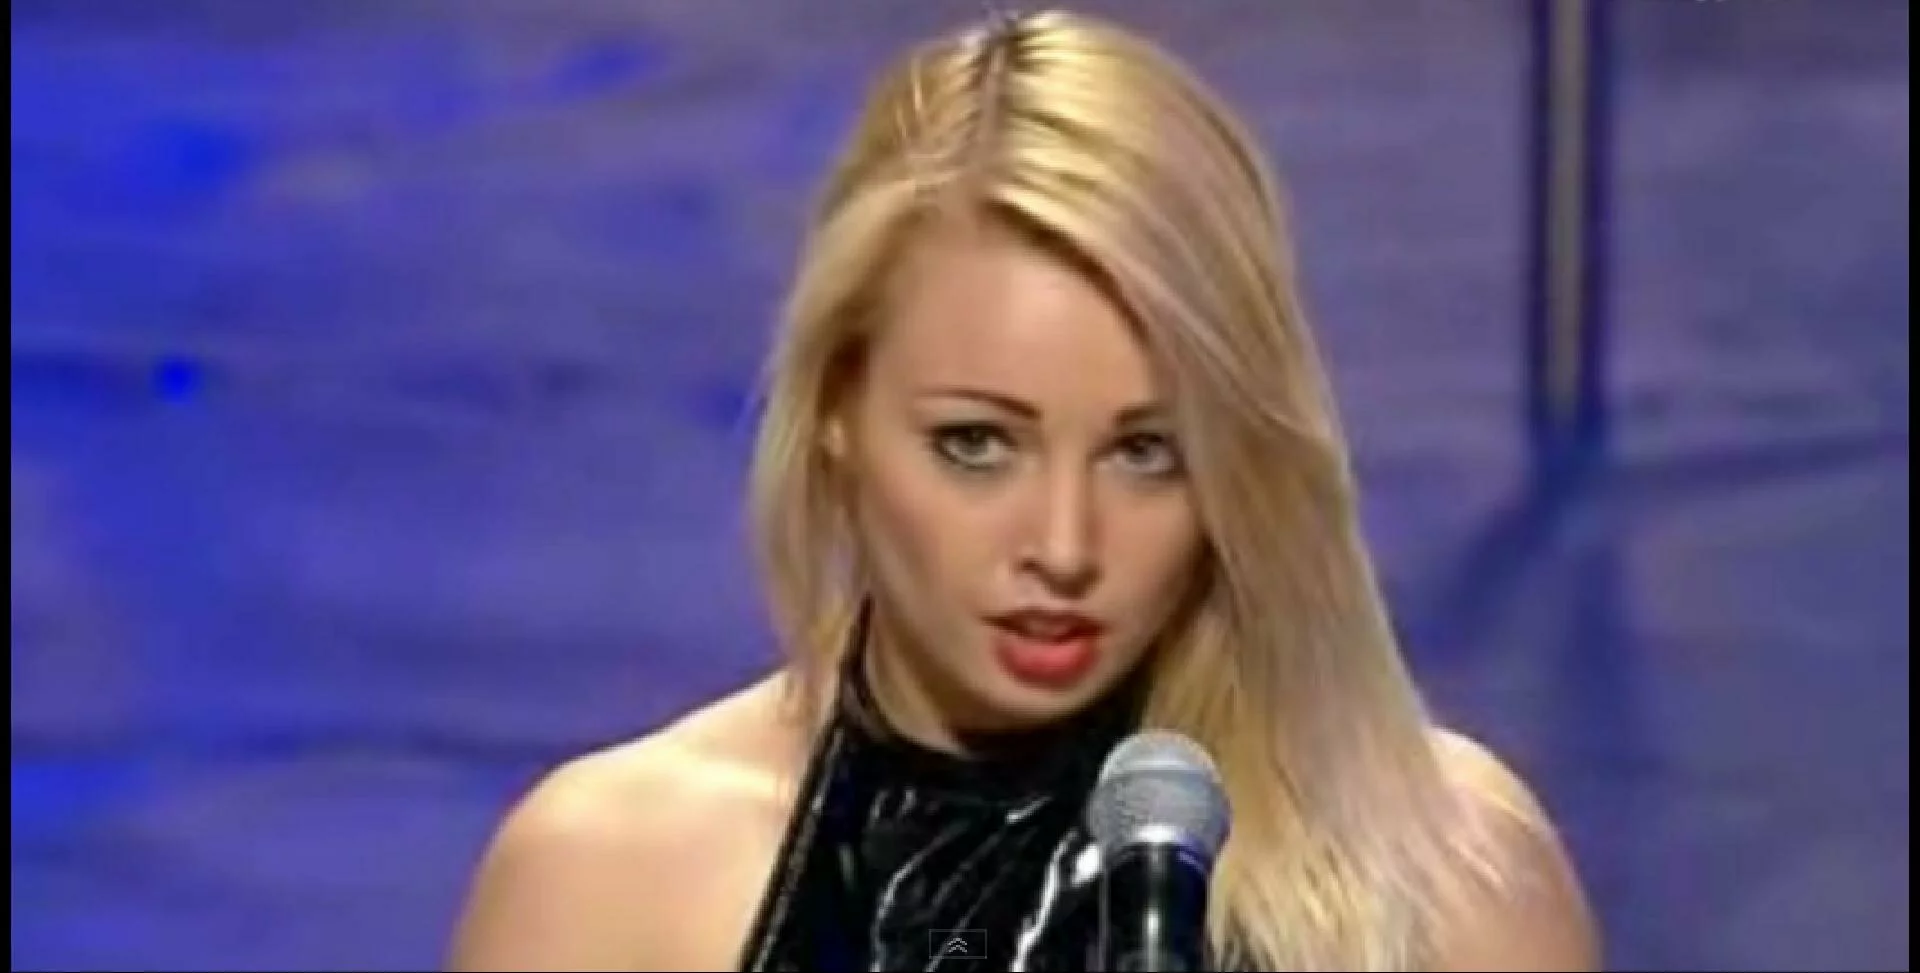 Ukraine got talent 5 - Anastasia Sokolova